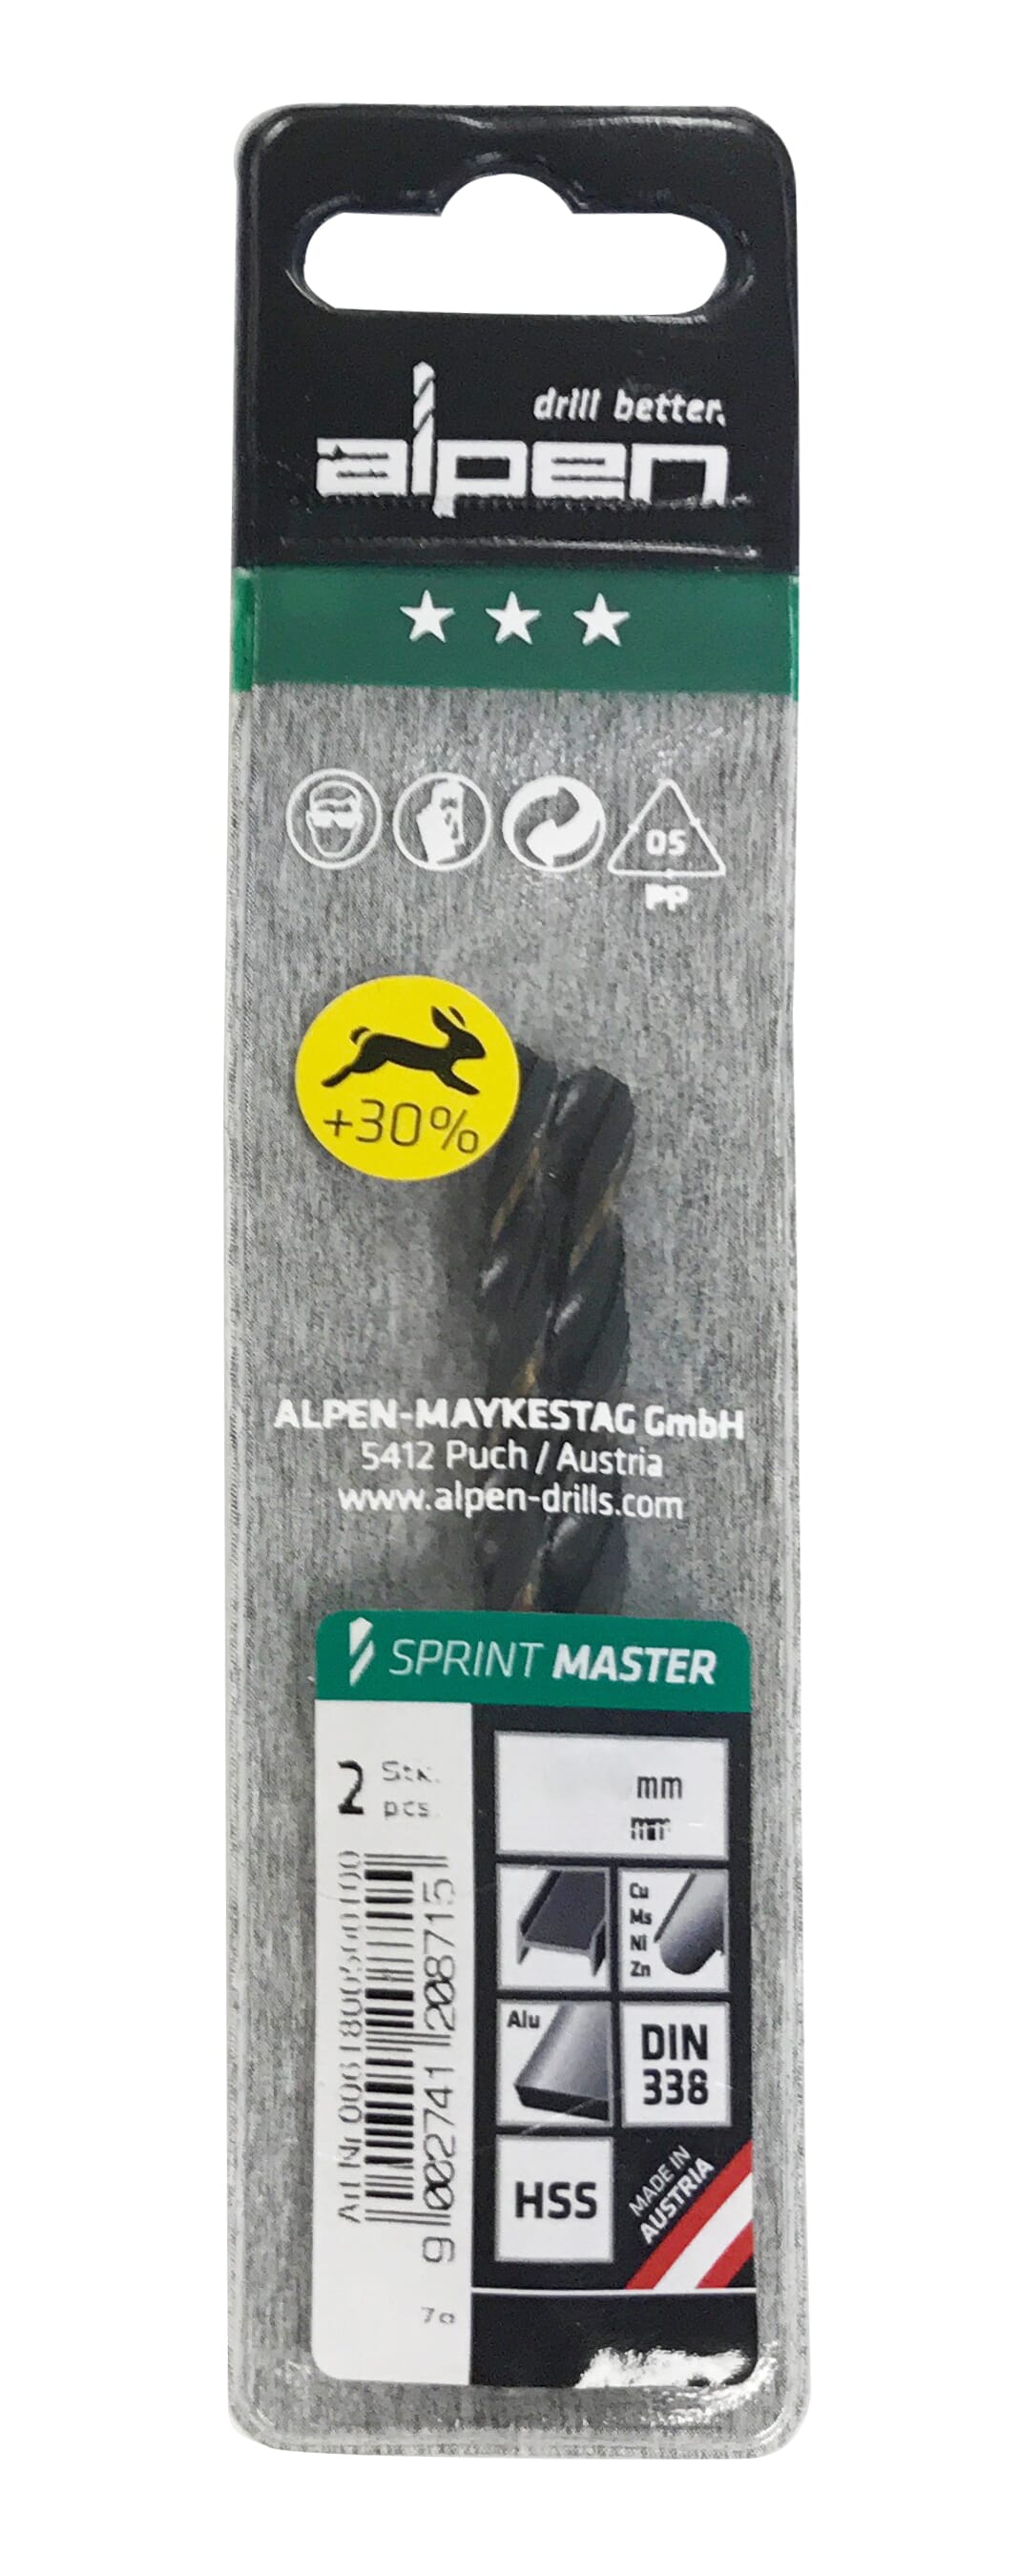 Alpen Series 618 Sprint Master In Plastic Wallet, 6.0 (Pkt Of 2)